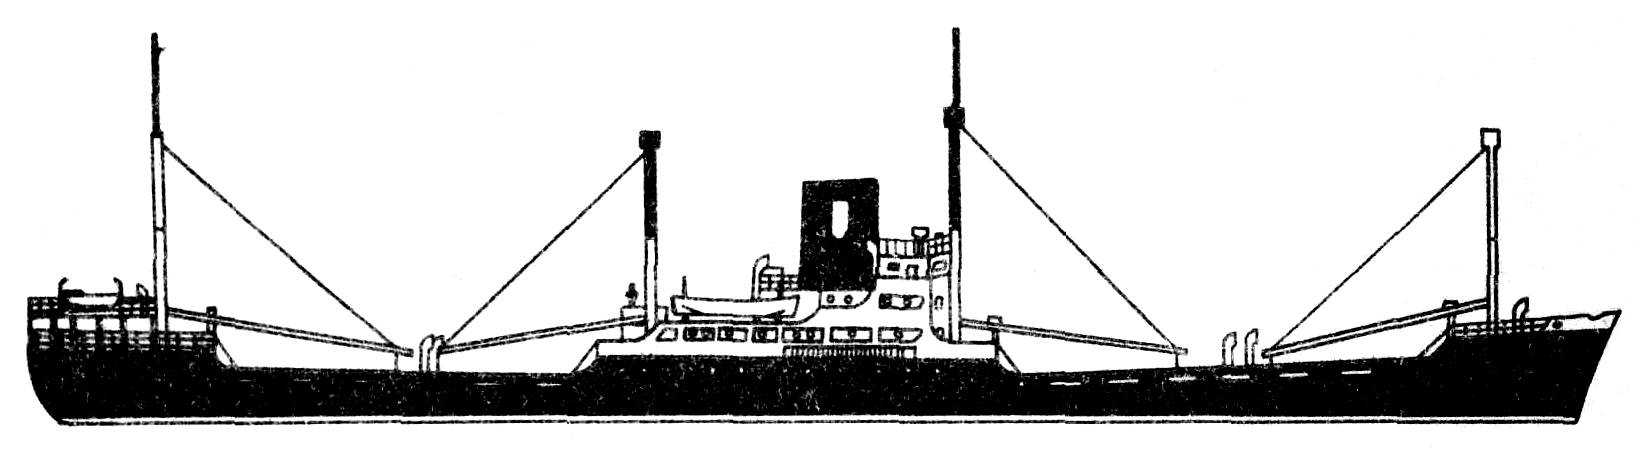 Грузовое судно Щецин